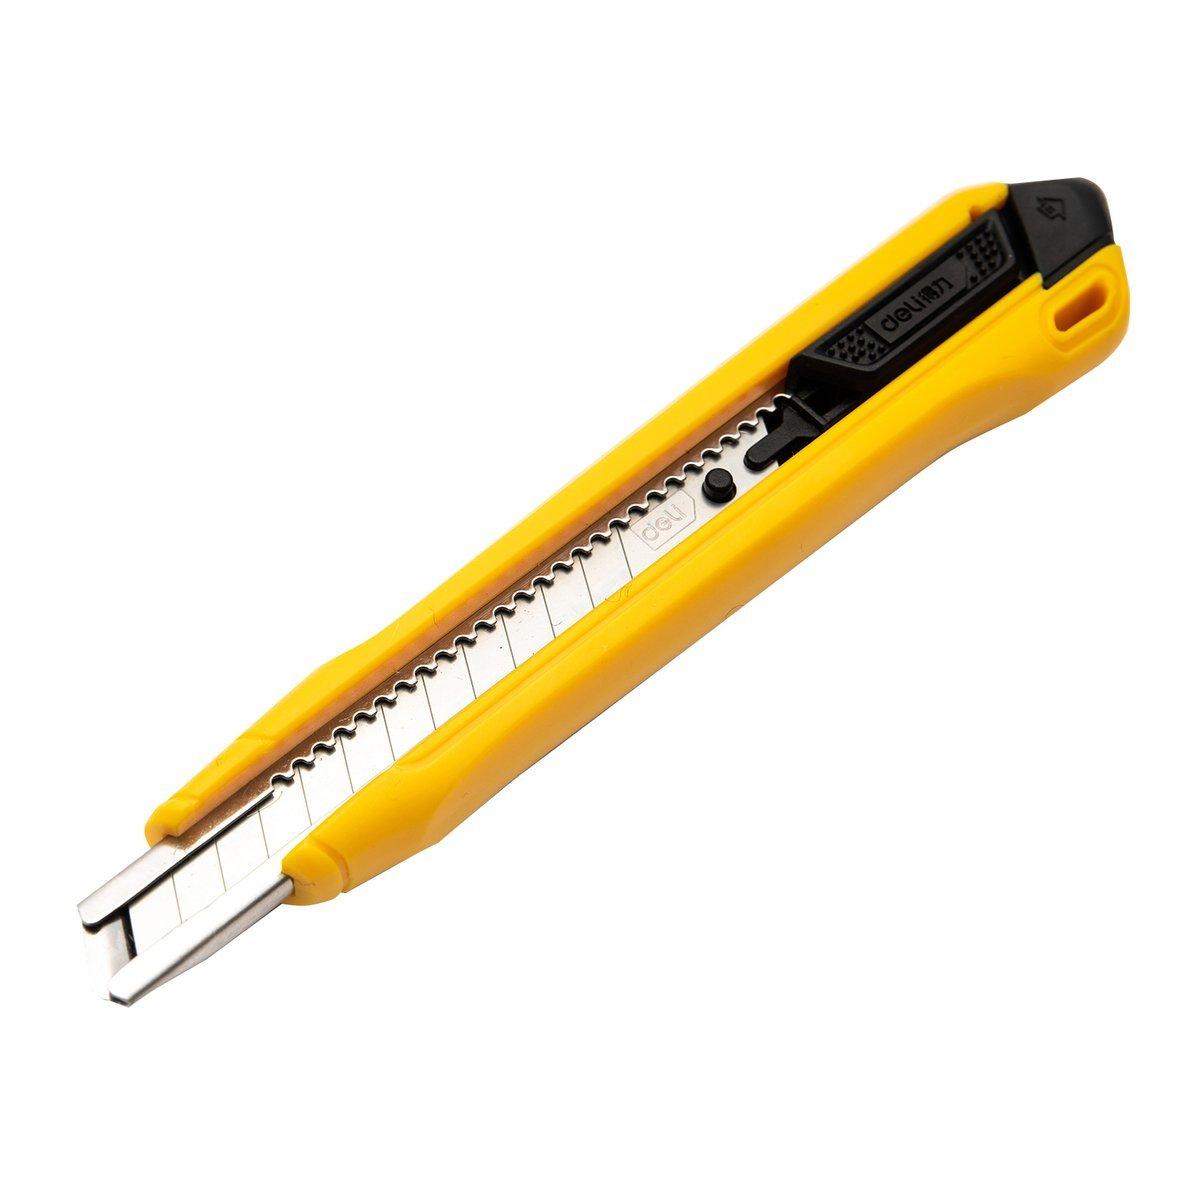 Odlamovací nůž Deli Tools EDL009B, SK4, 9 mm (žlutý)